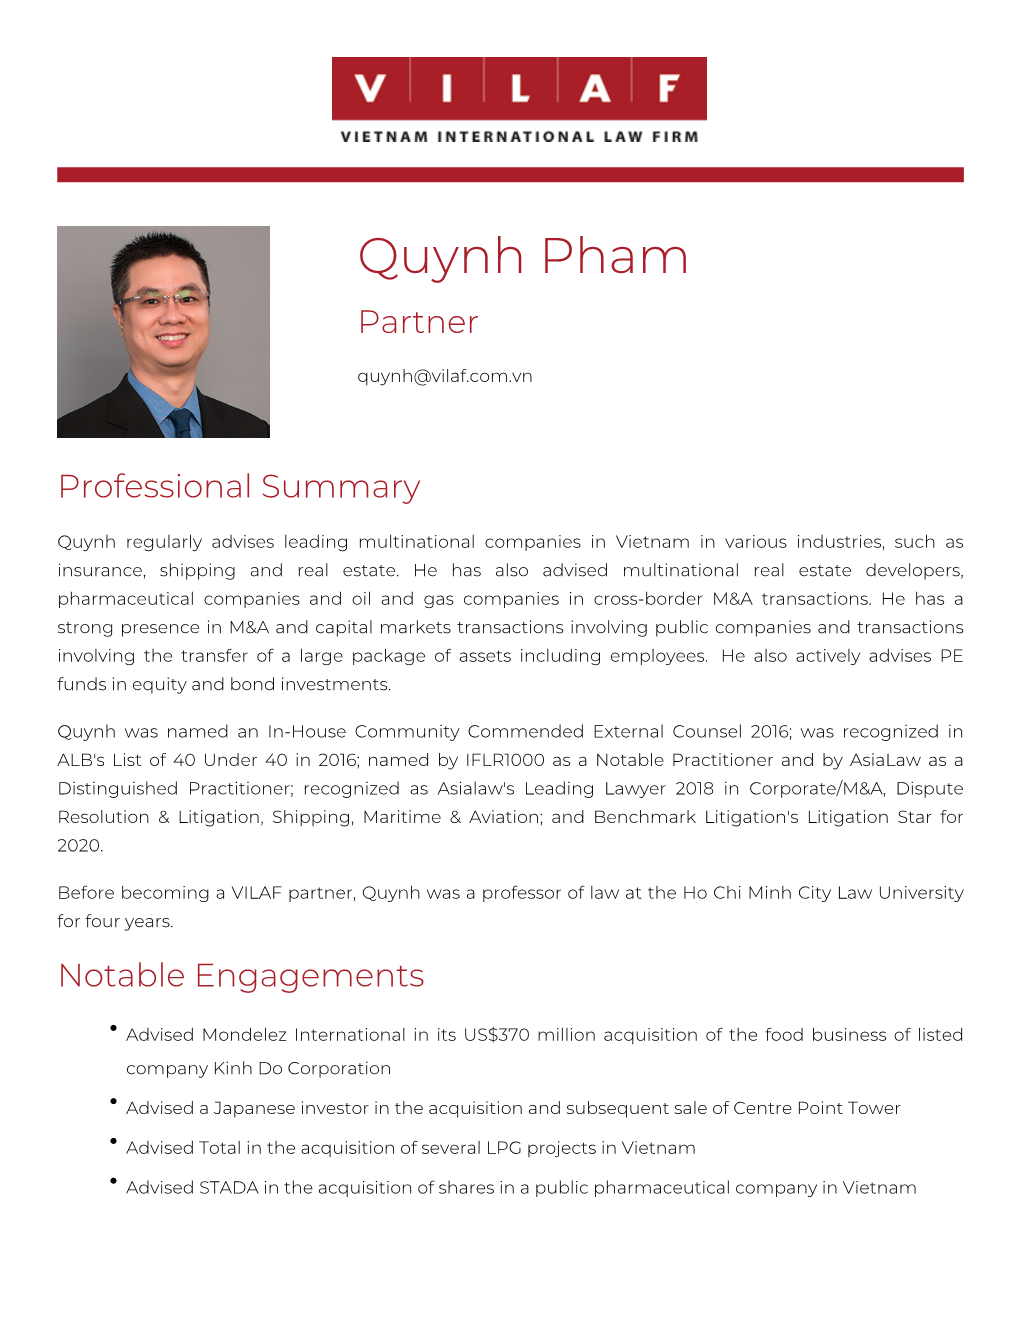 Quynh Pham Partner